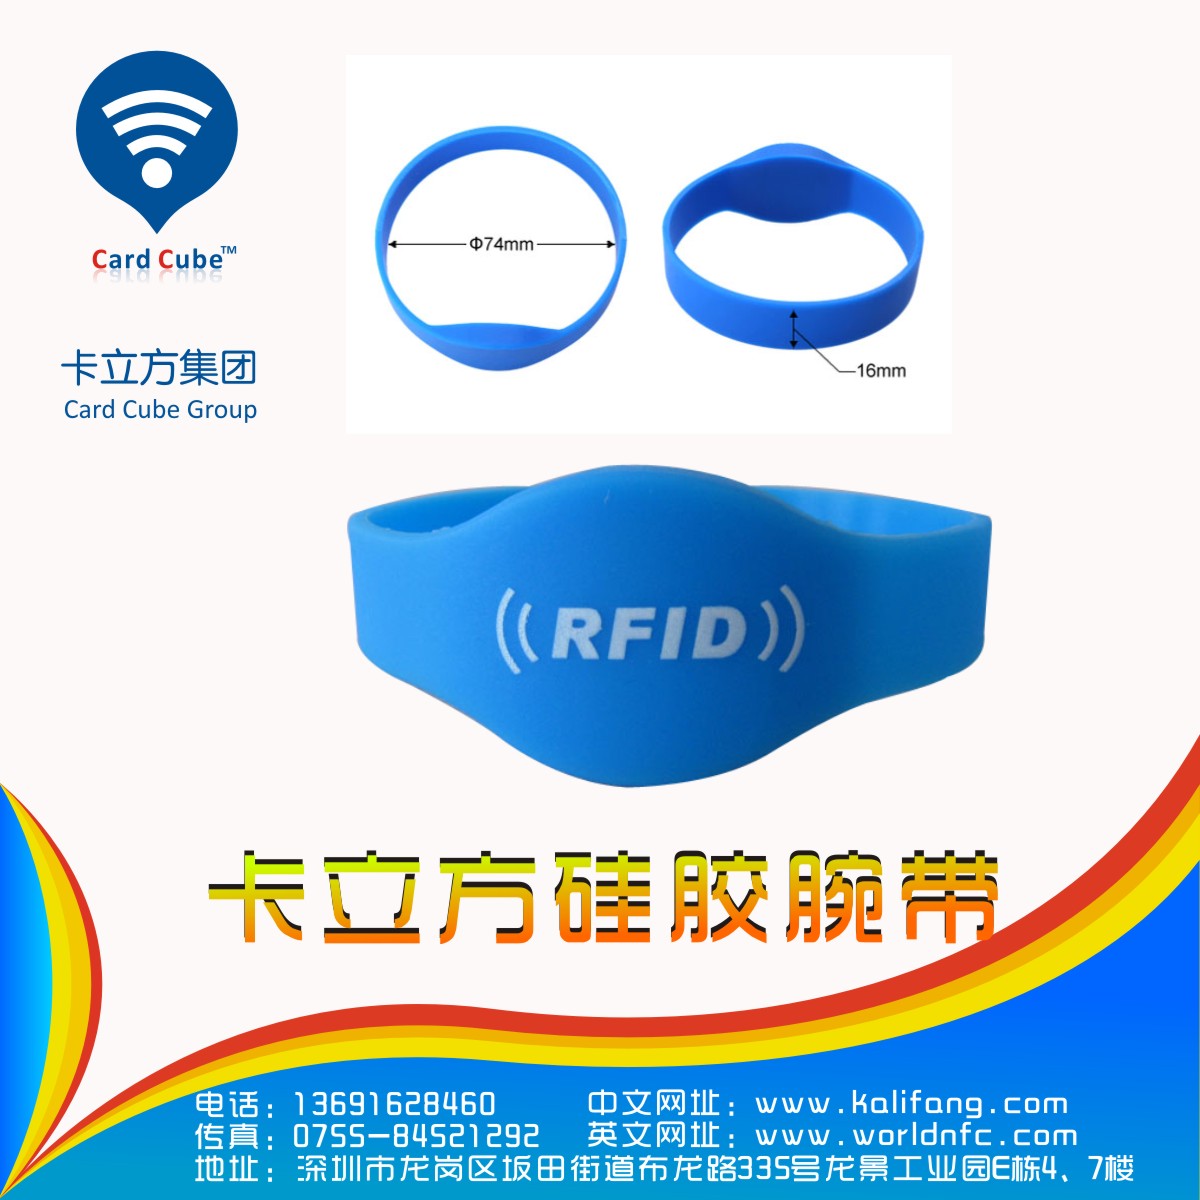 卡立方rfid腕带手表|硅胶RFID腕带|腕带厂家那里有? 卡立方rfid腕带标签